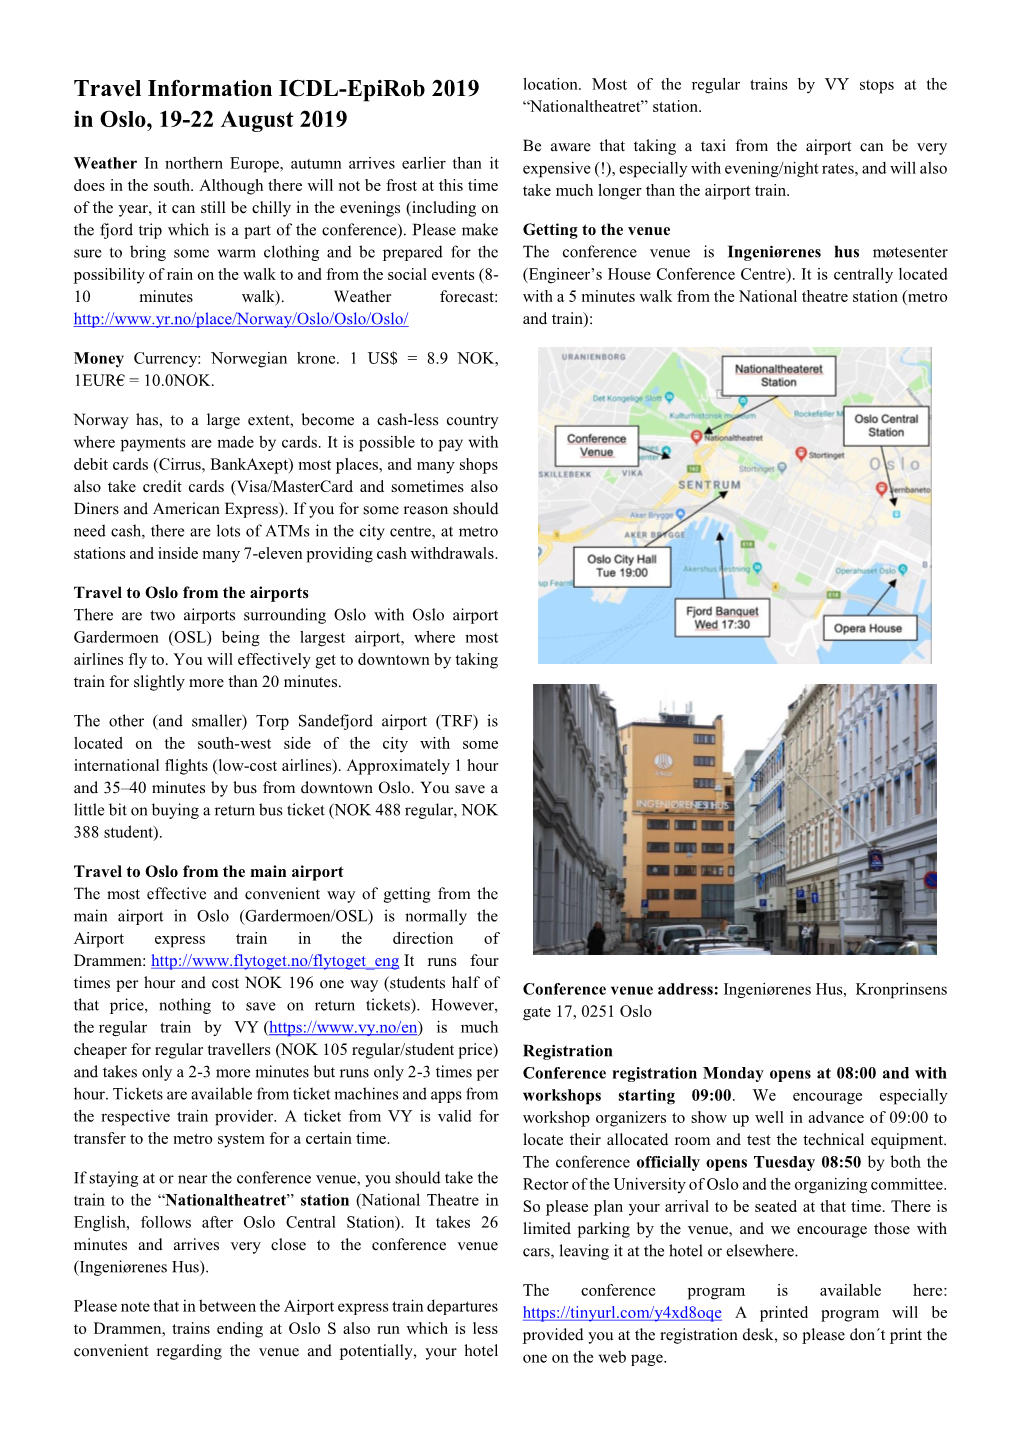 Travel Information ICDL-Epirob 2019 in Oslo, 19